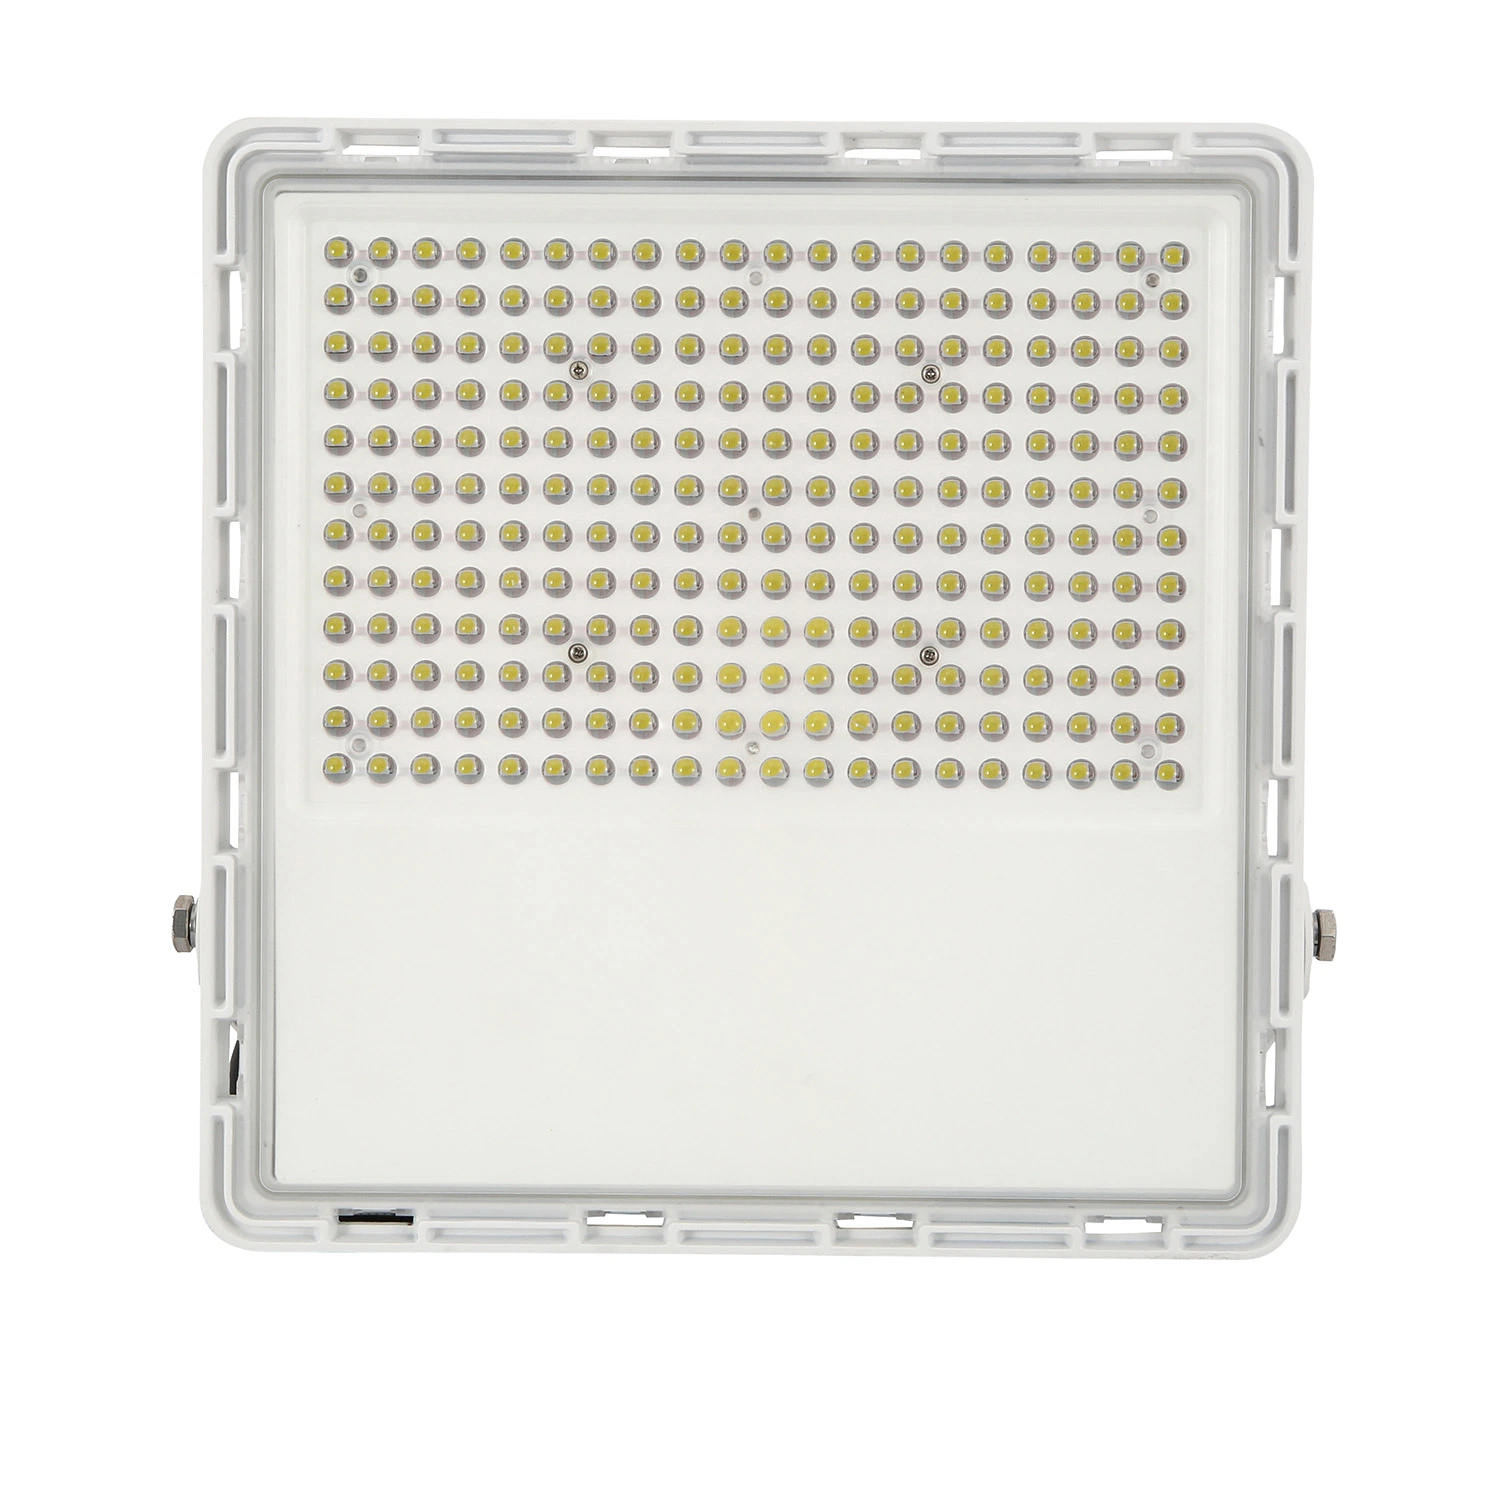 LED-Strahler 150W Außenstrahler Flutlicht AC 220V Professional Beleuchtung Street Lamp Wasserdicht IP65